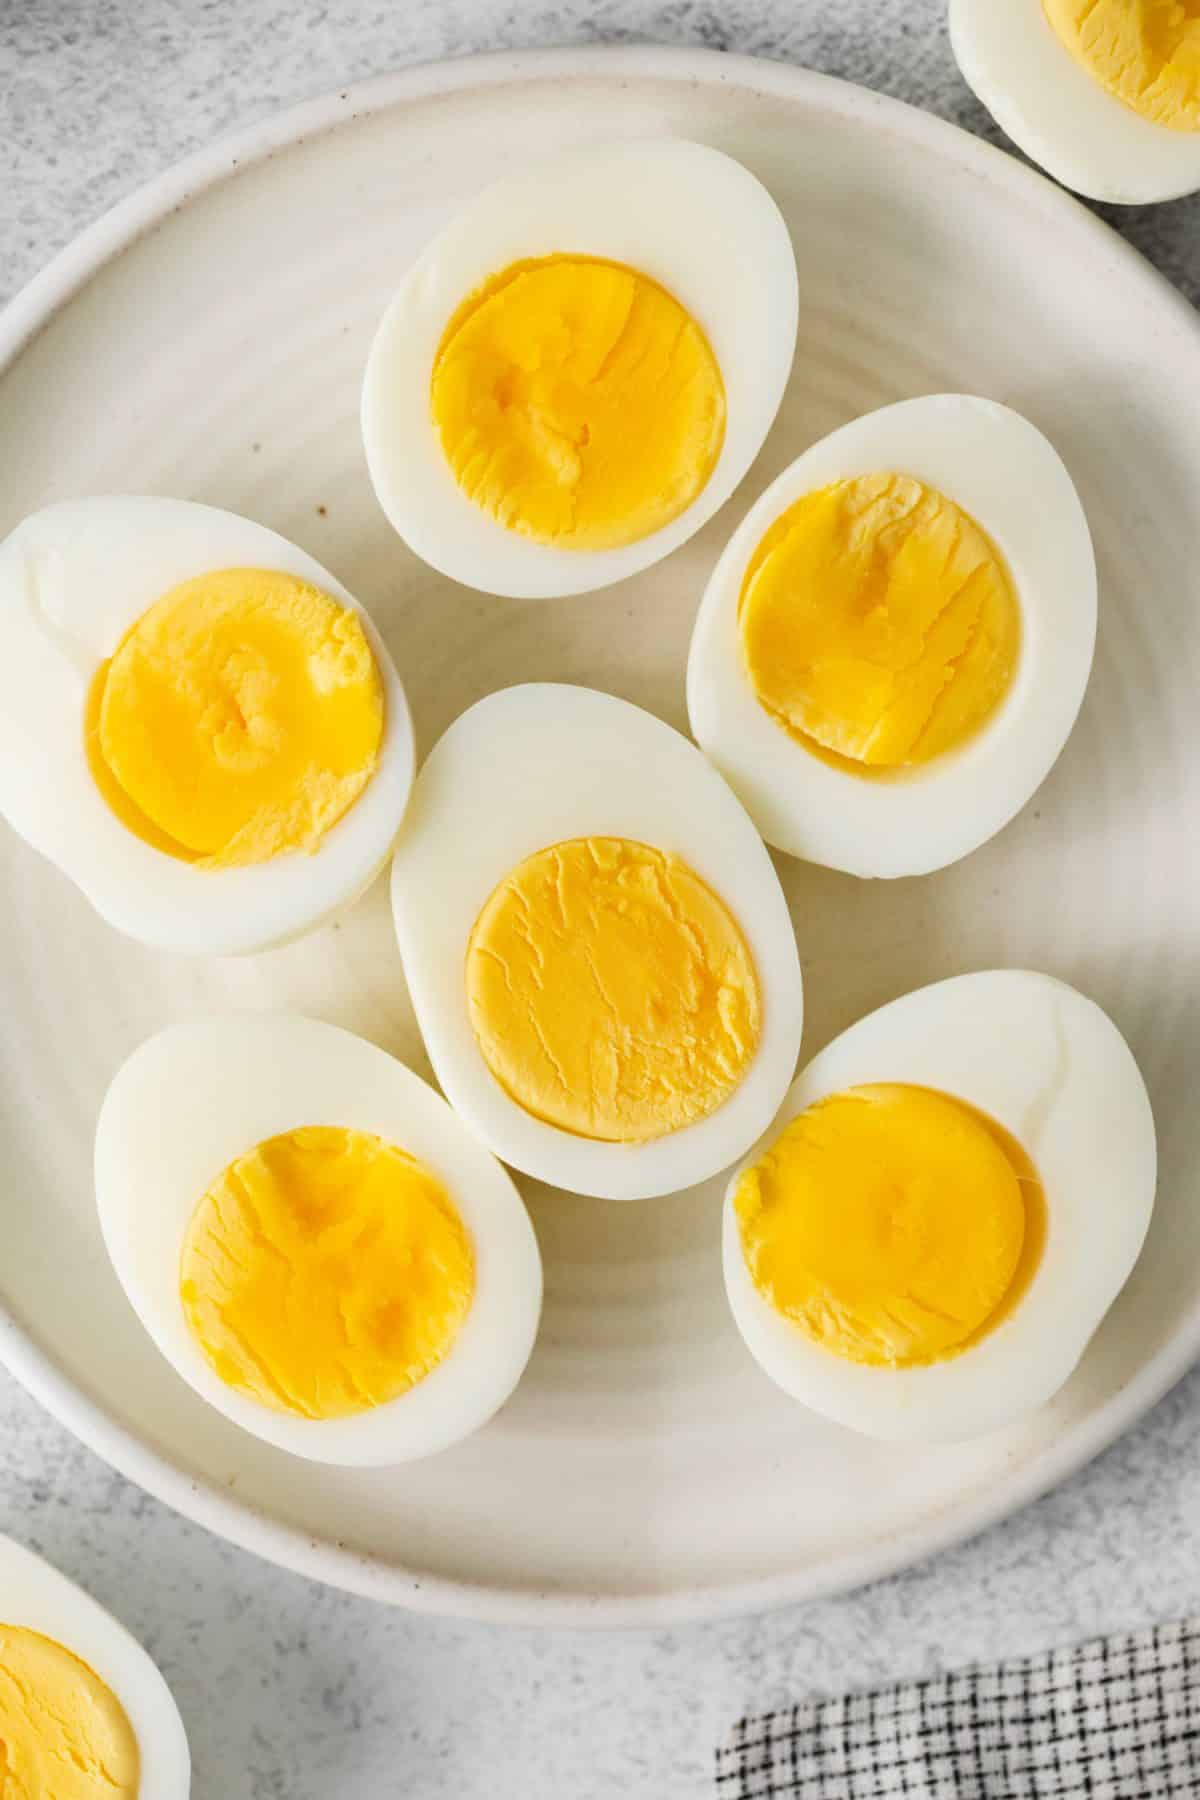 Hard boiled eggs prepared in the air fryer